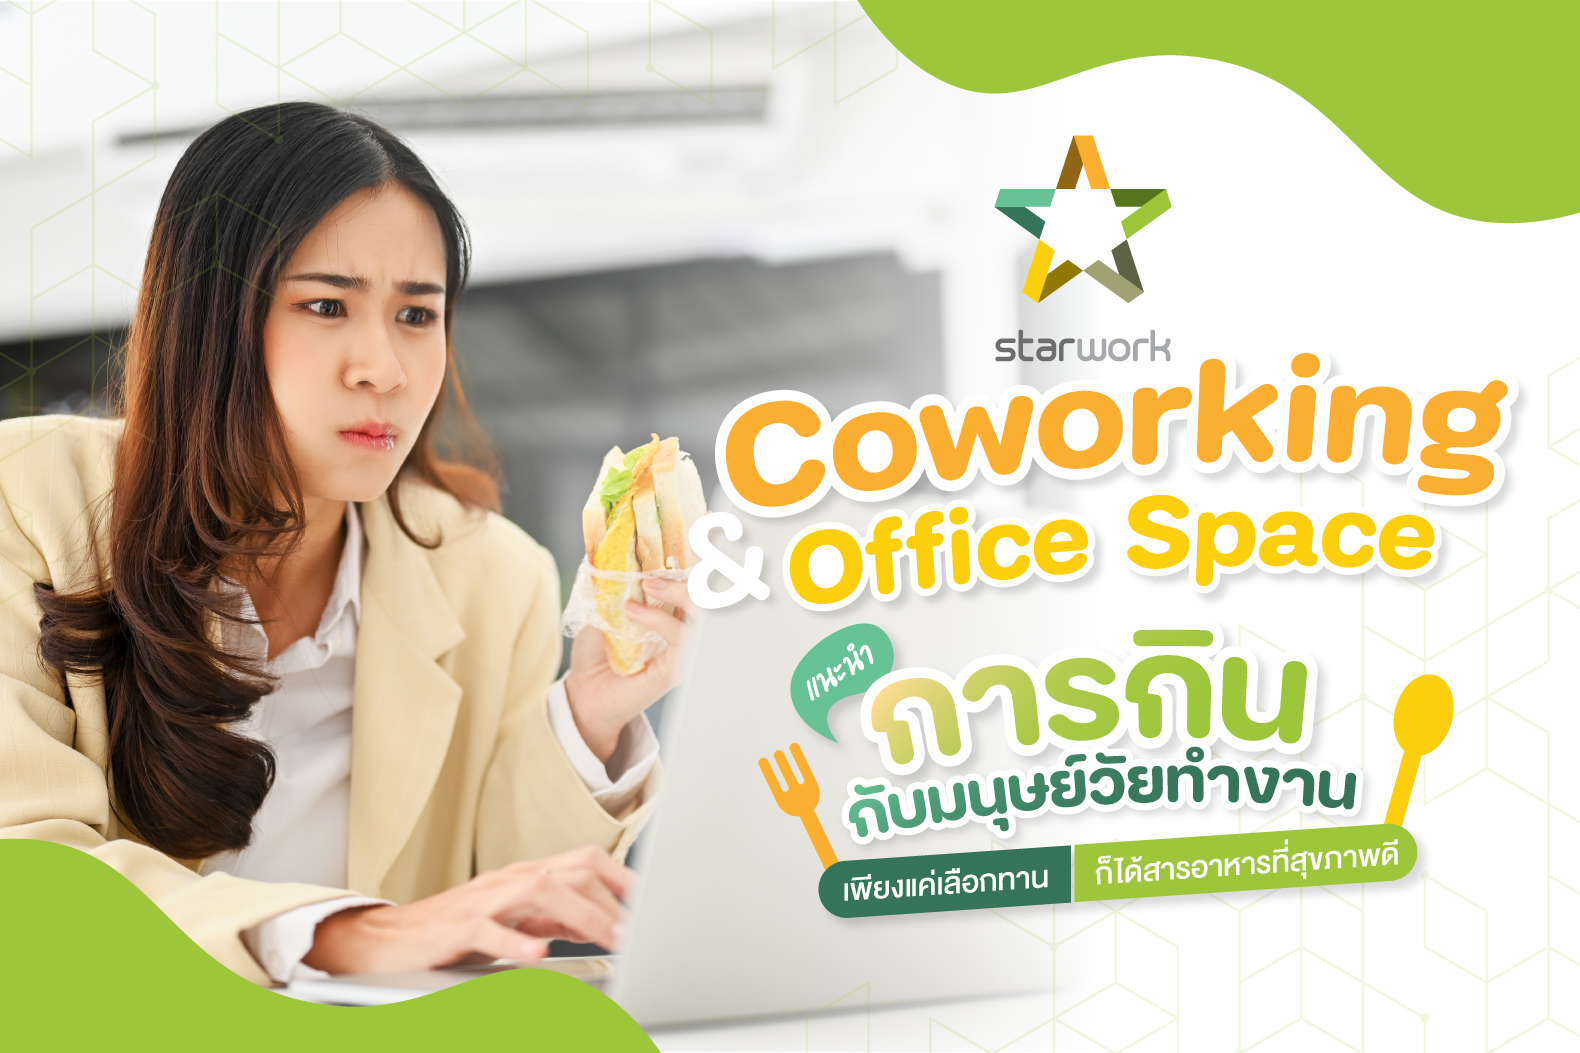 StarWork Coworking & Office space แนะนำการกินกับมนุษย์วัยทำงาน